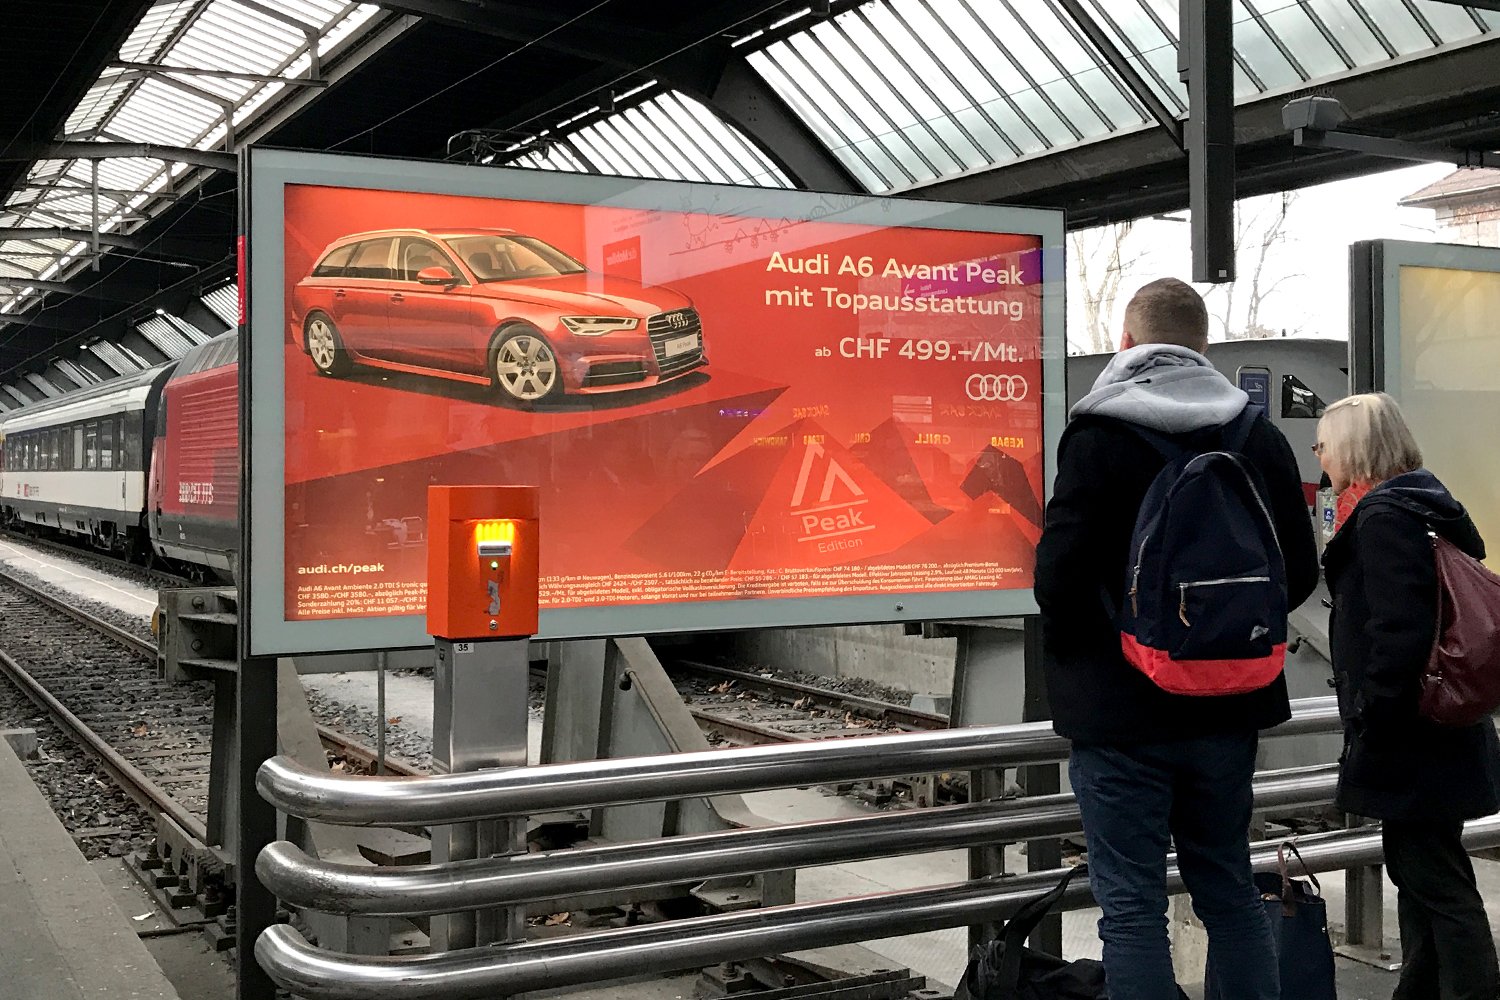 Audi Peak Edition Plakat im Bahnhofsumfeld